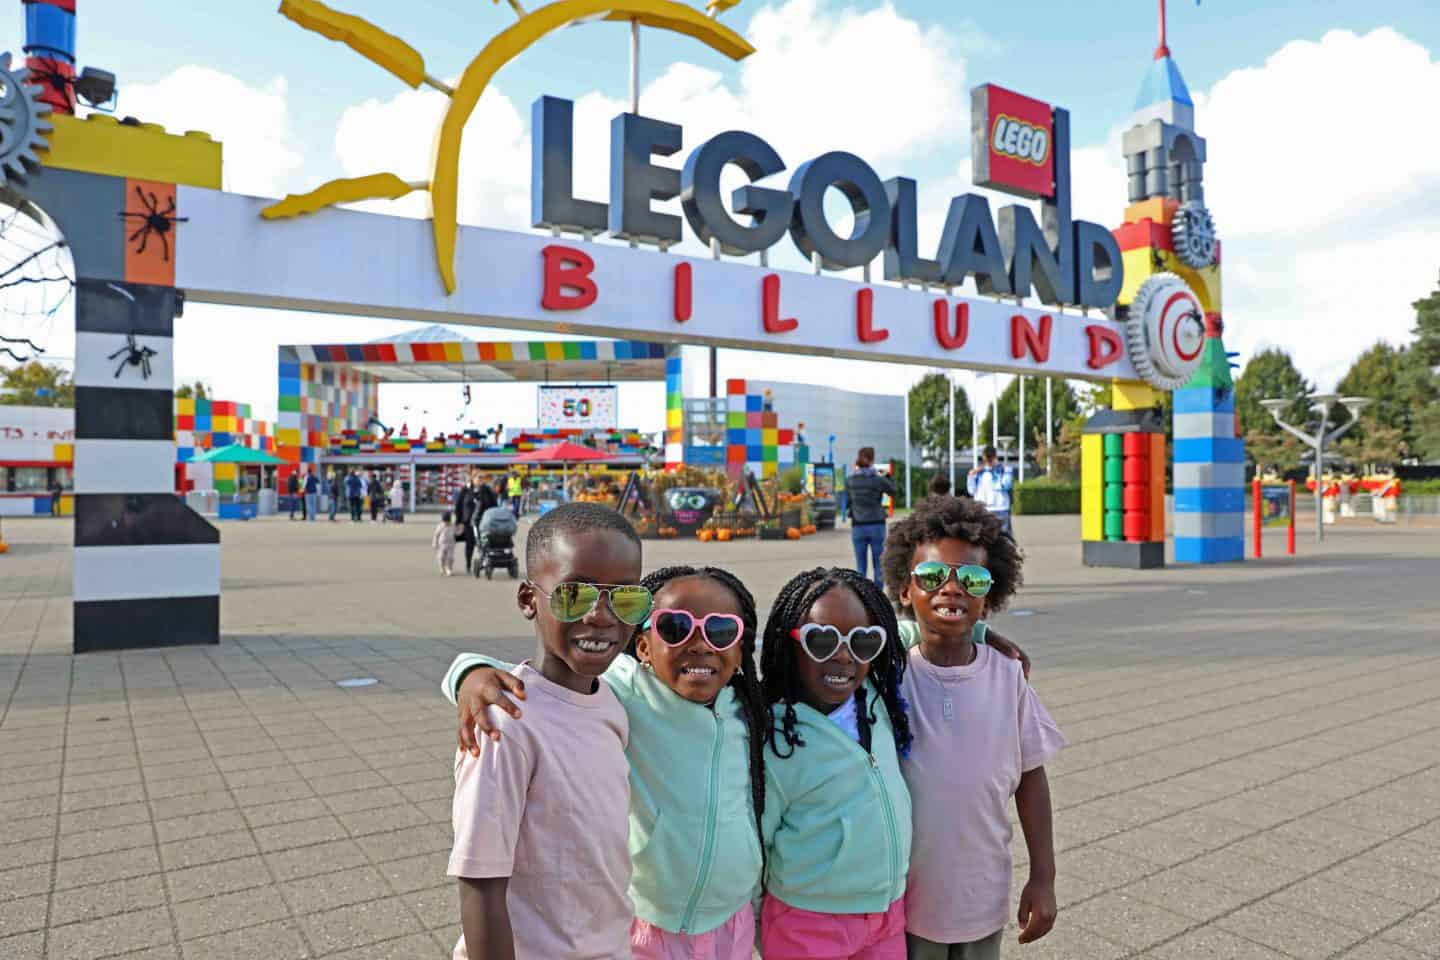 Billund Denmark With Kids The Original Legoland Theme Park and Lego House